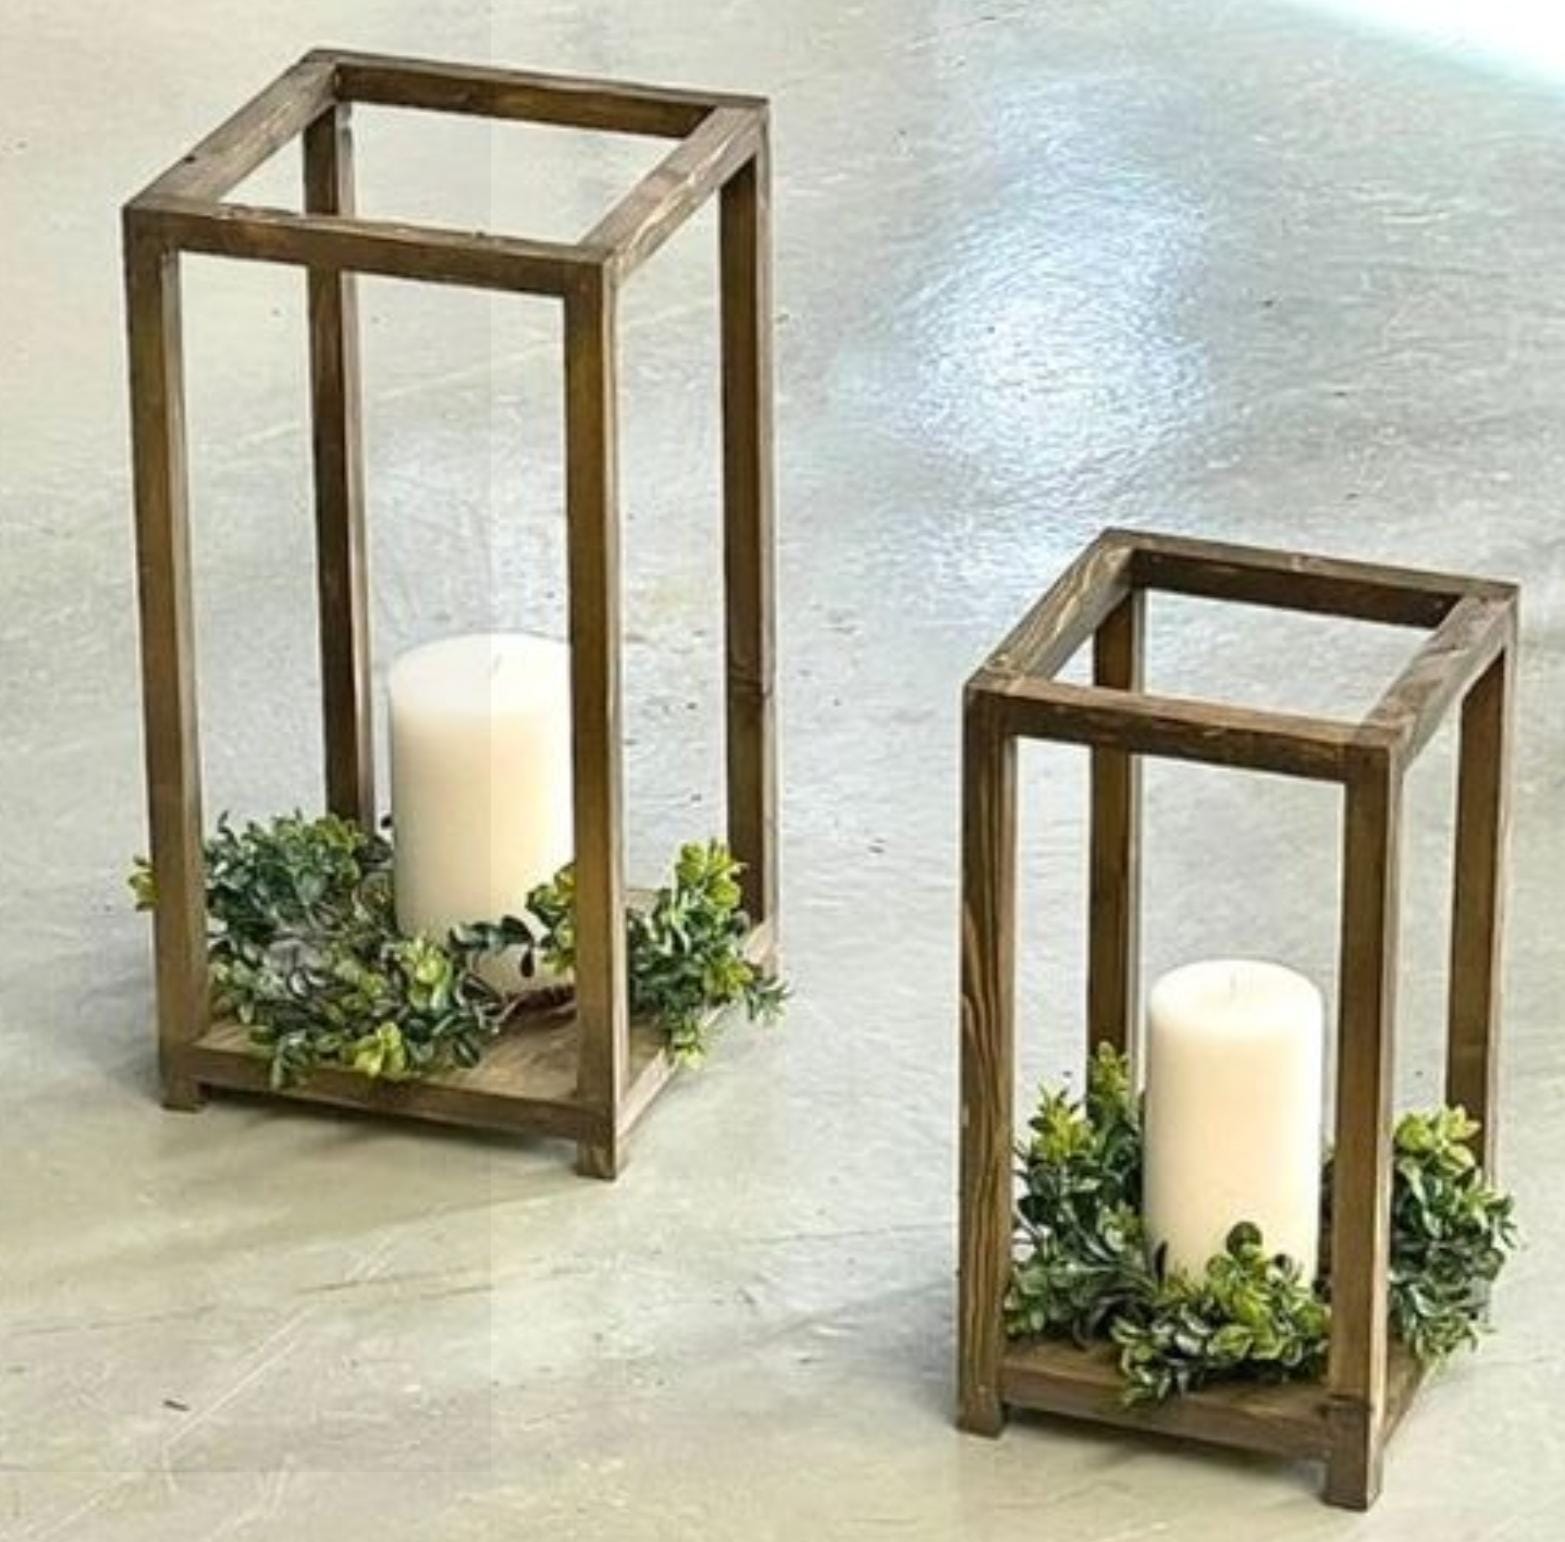 Simple wooden lanterns set